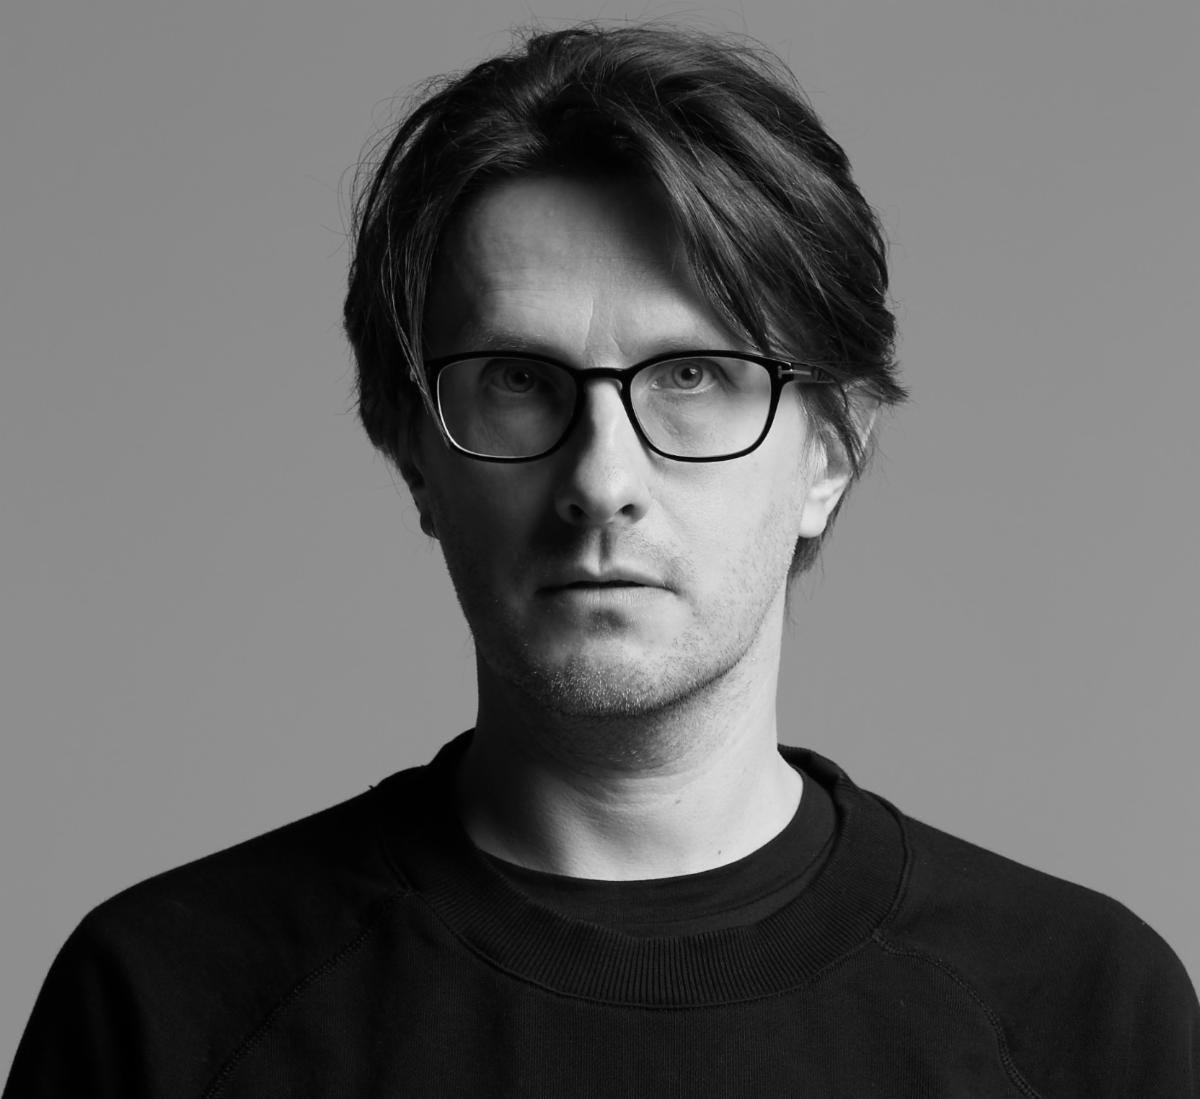 Steven Wilson has released his new single “Personal Shopper"